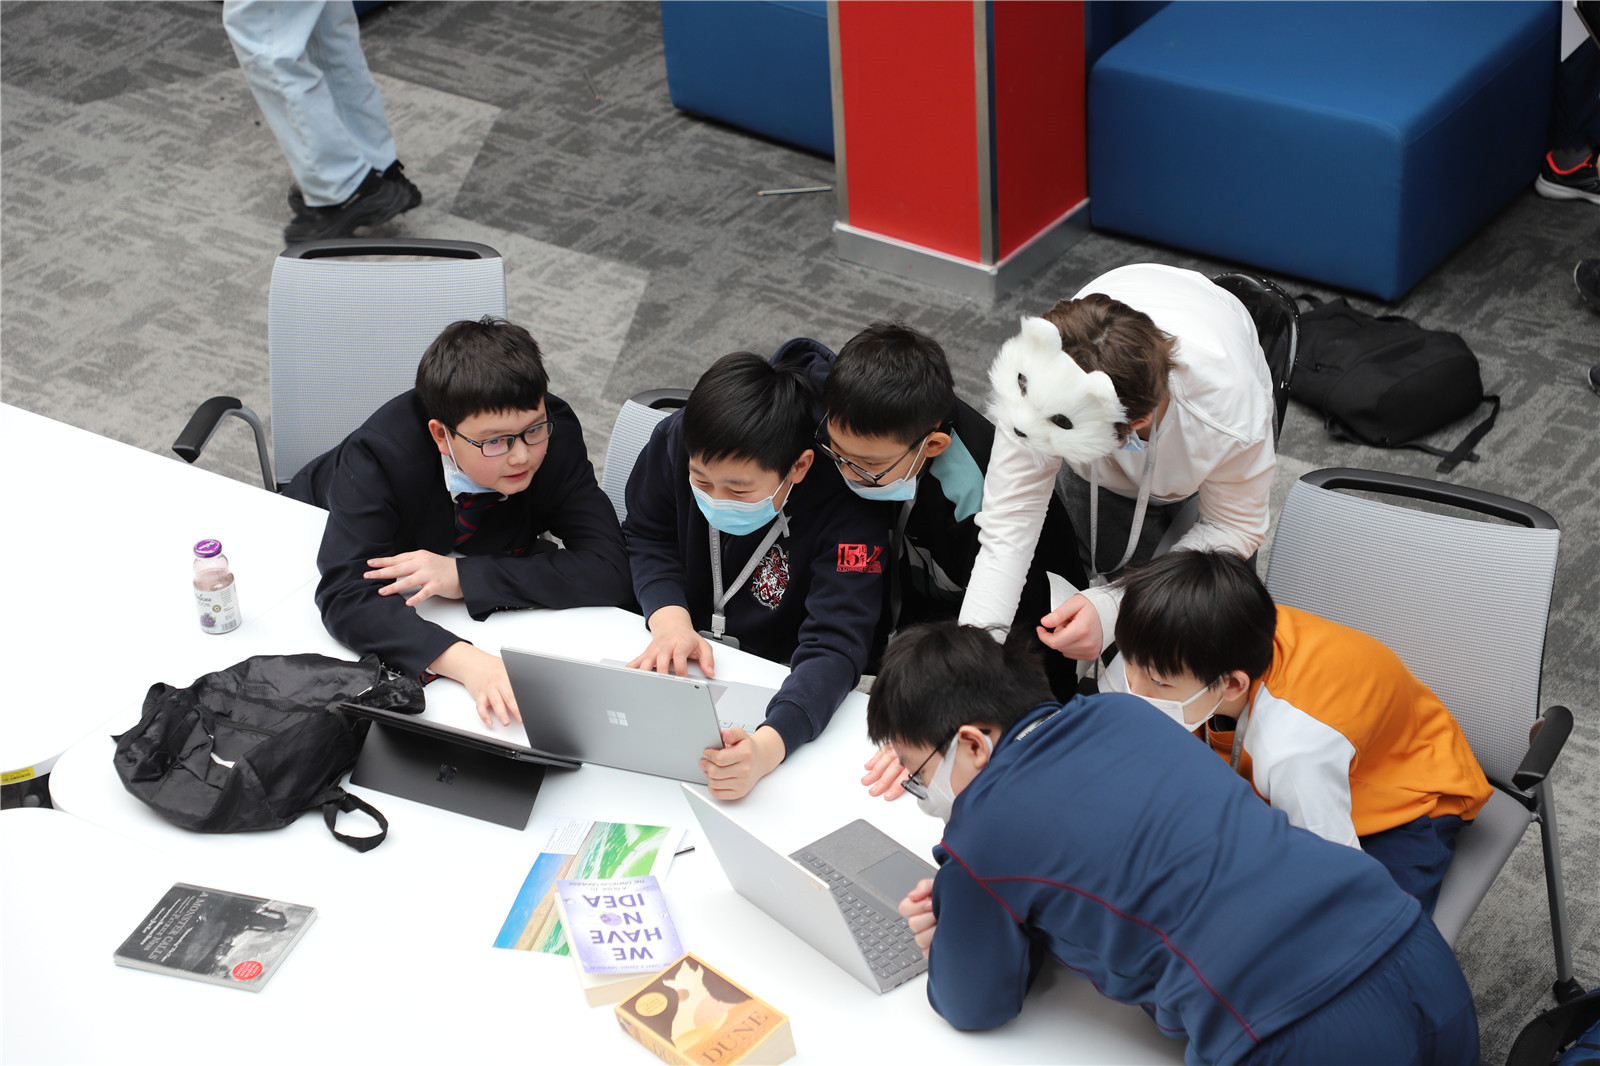 Senior School students reading